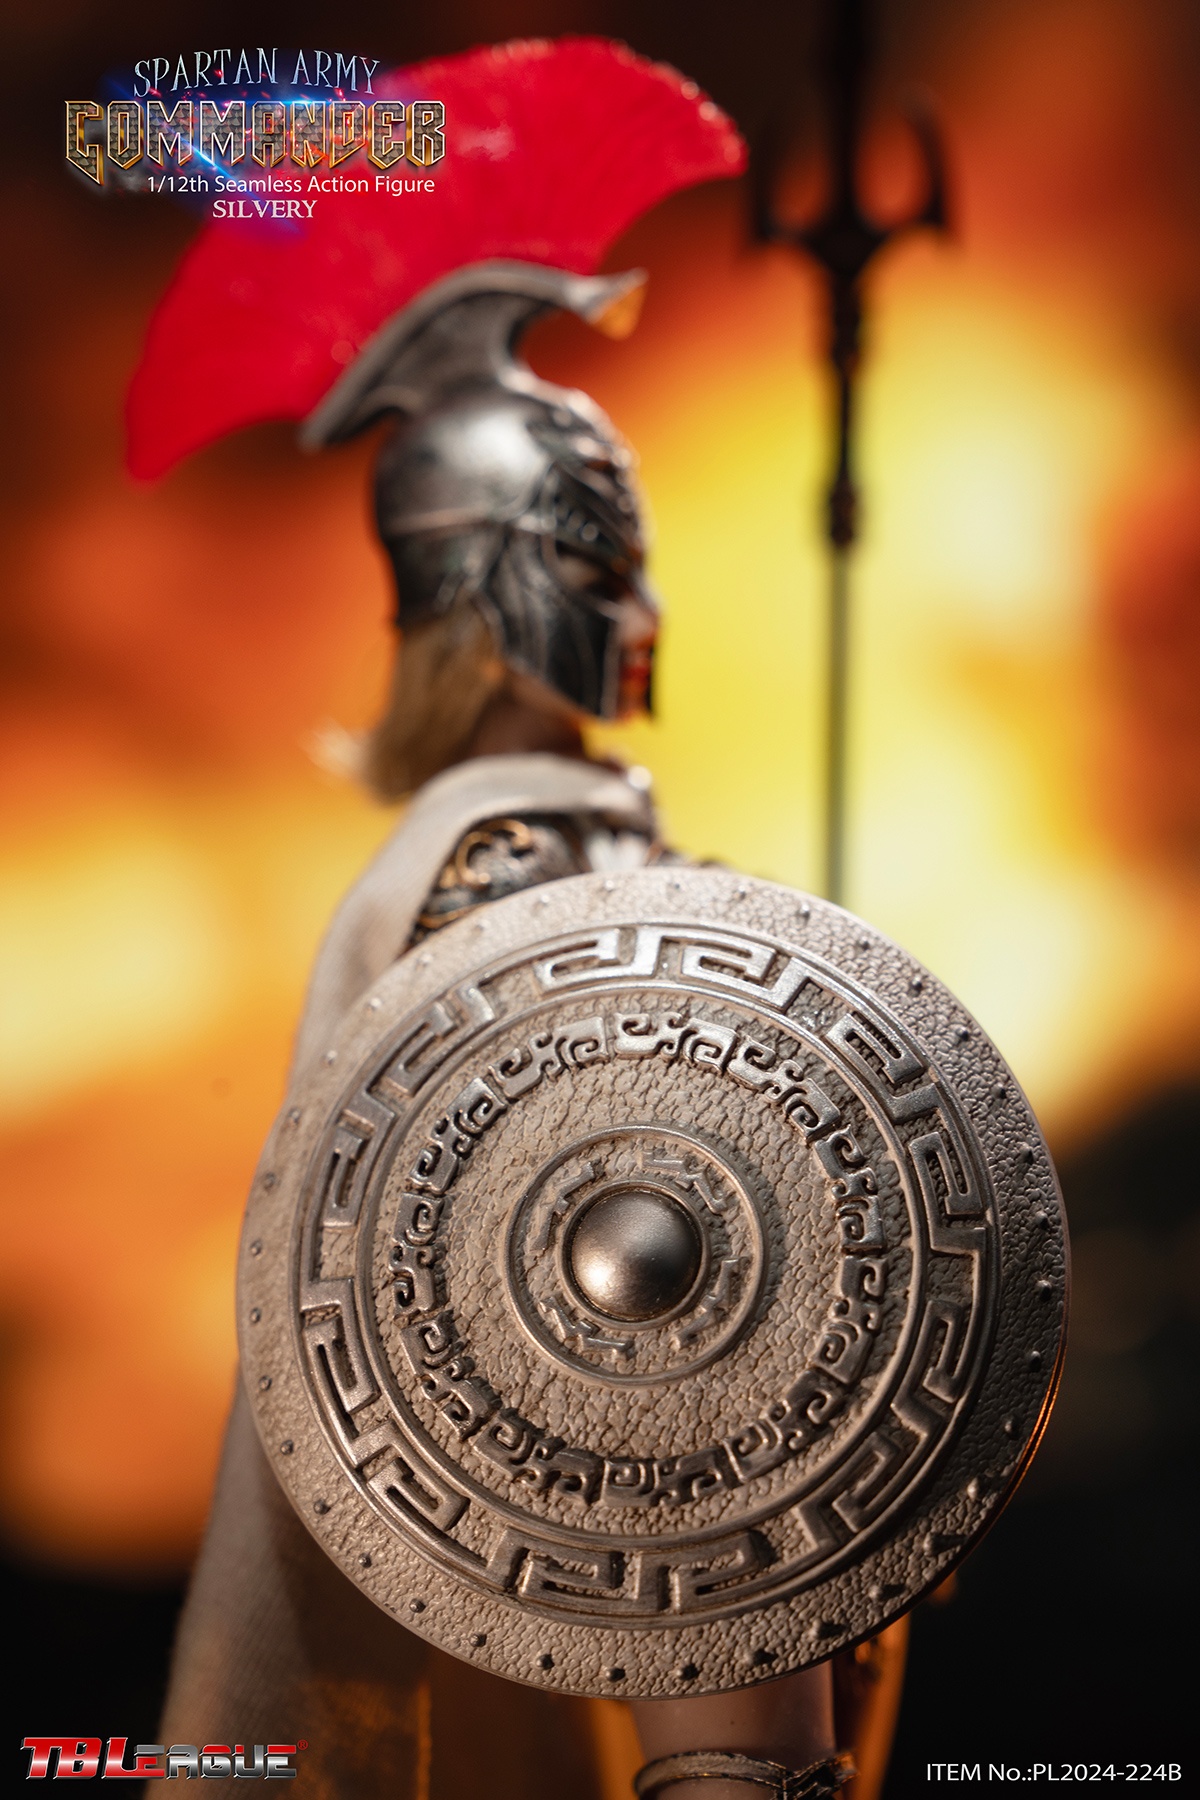 NEW PRODUCT: TBLeague - Spartan Army Commander 1/12 3422